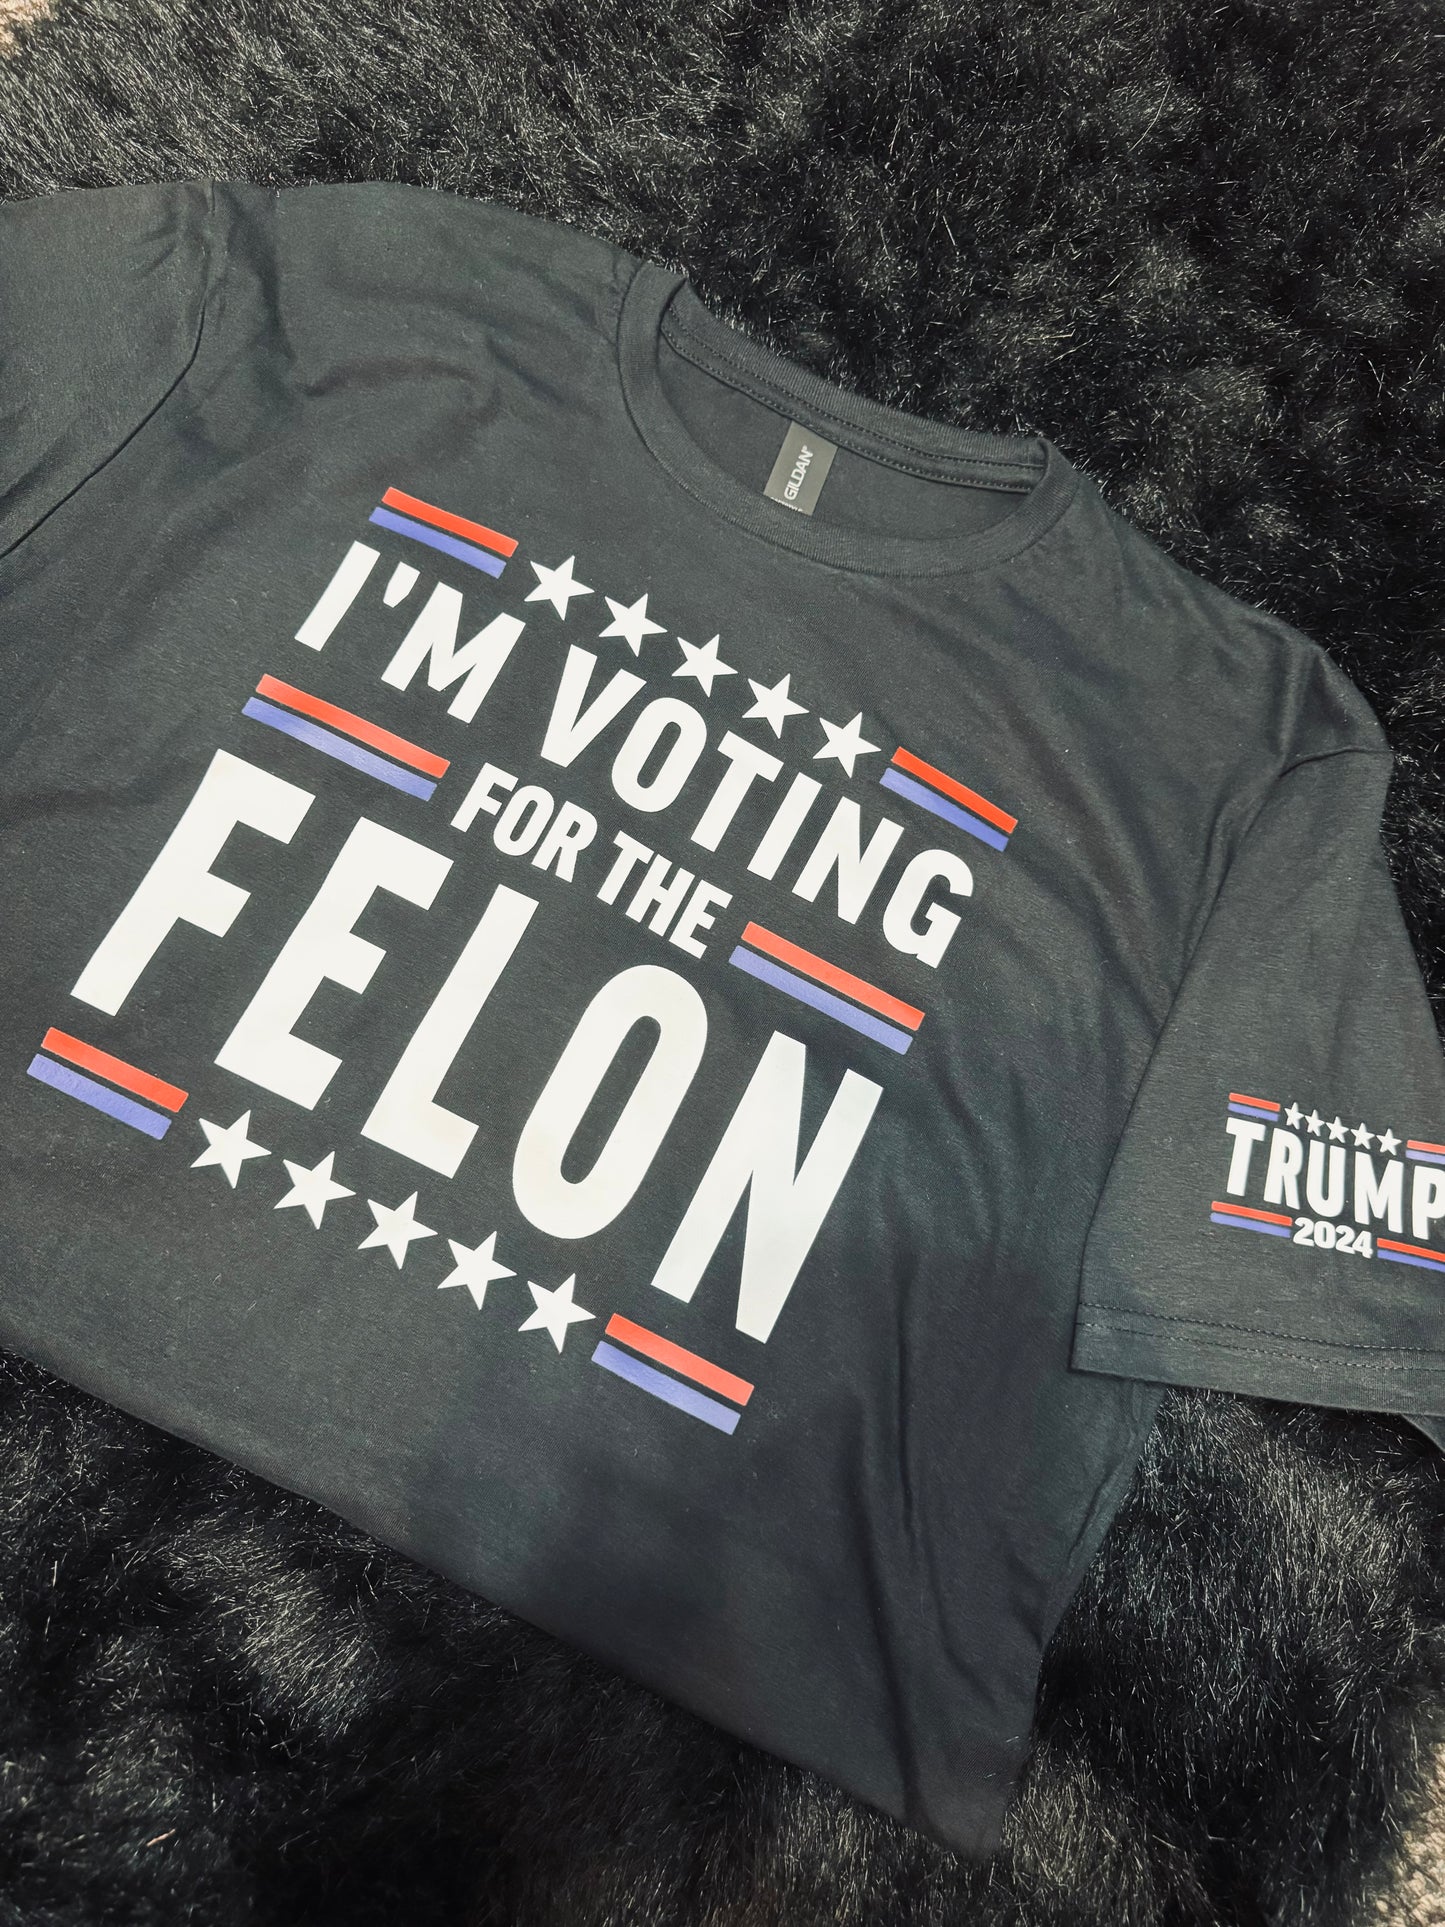 I’m voting for the felon T shirt